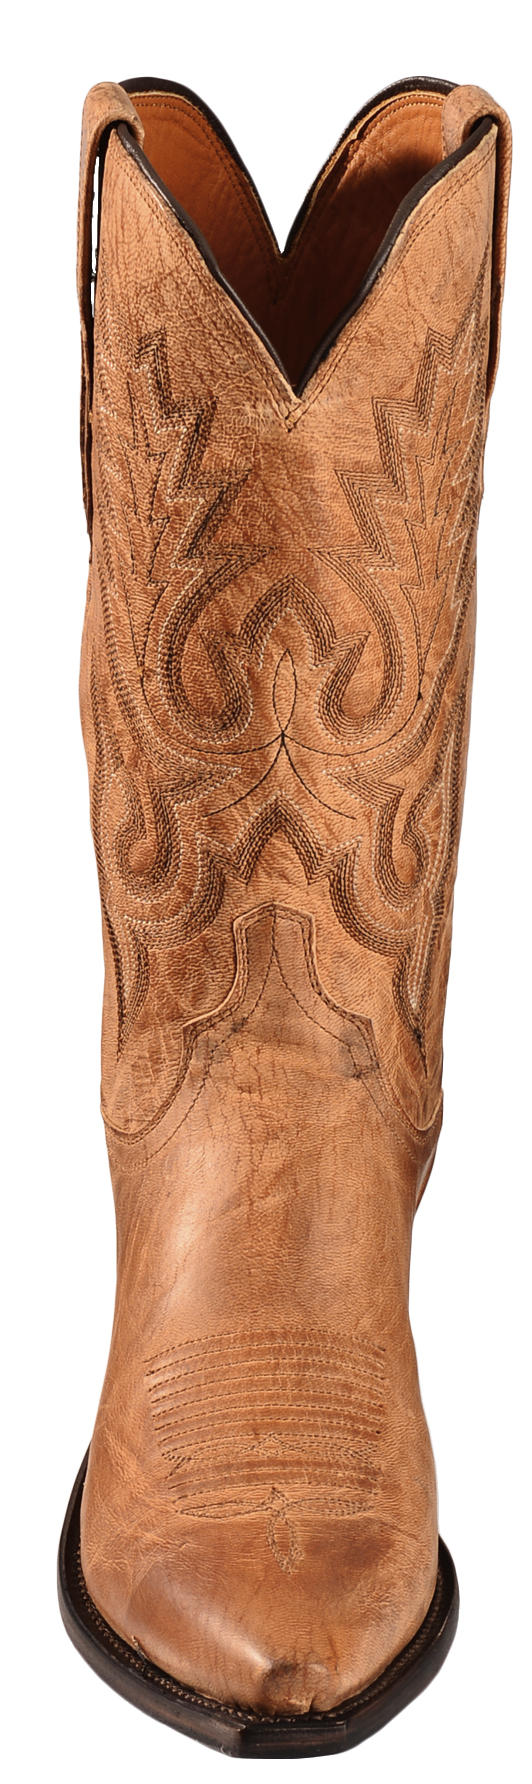 Lucchese Handmade 1883 Tan Mad Dog Goatskin Cowboy Boots - Snip Toe ...